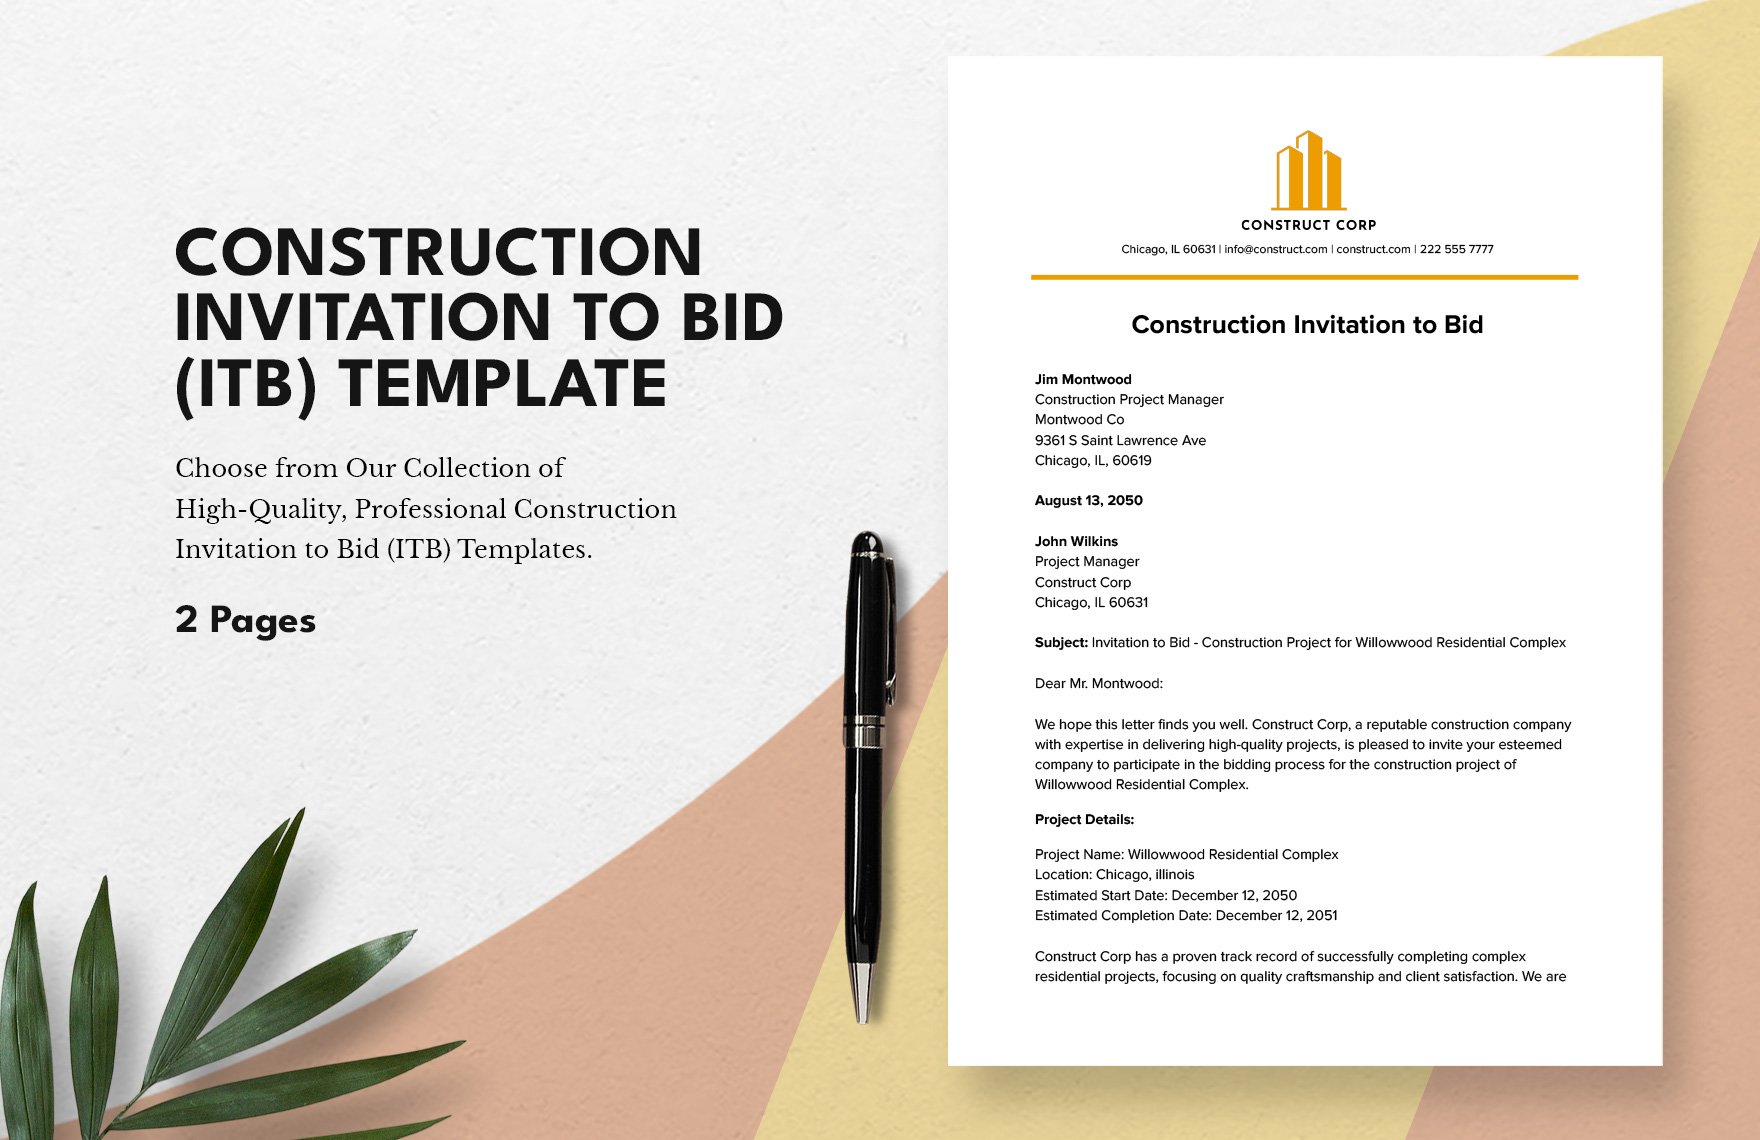 Construction Invitation to Bid (ITB) Template